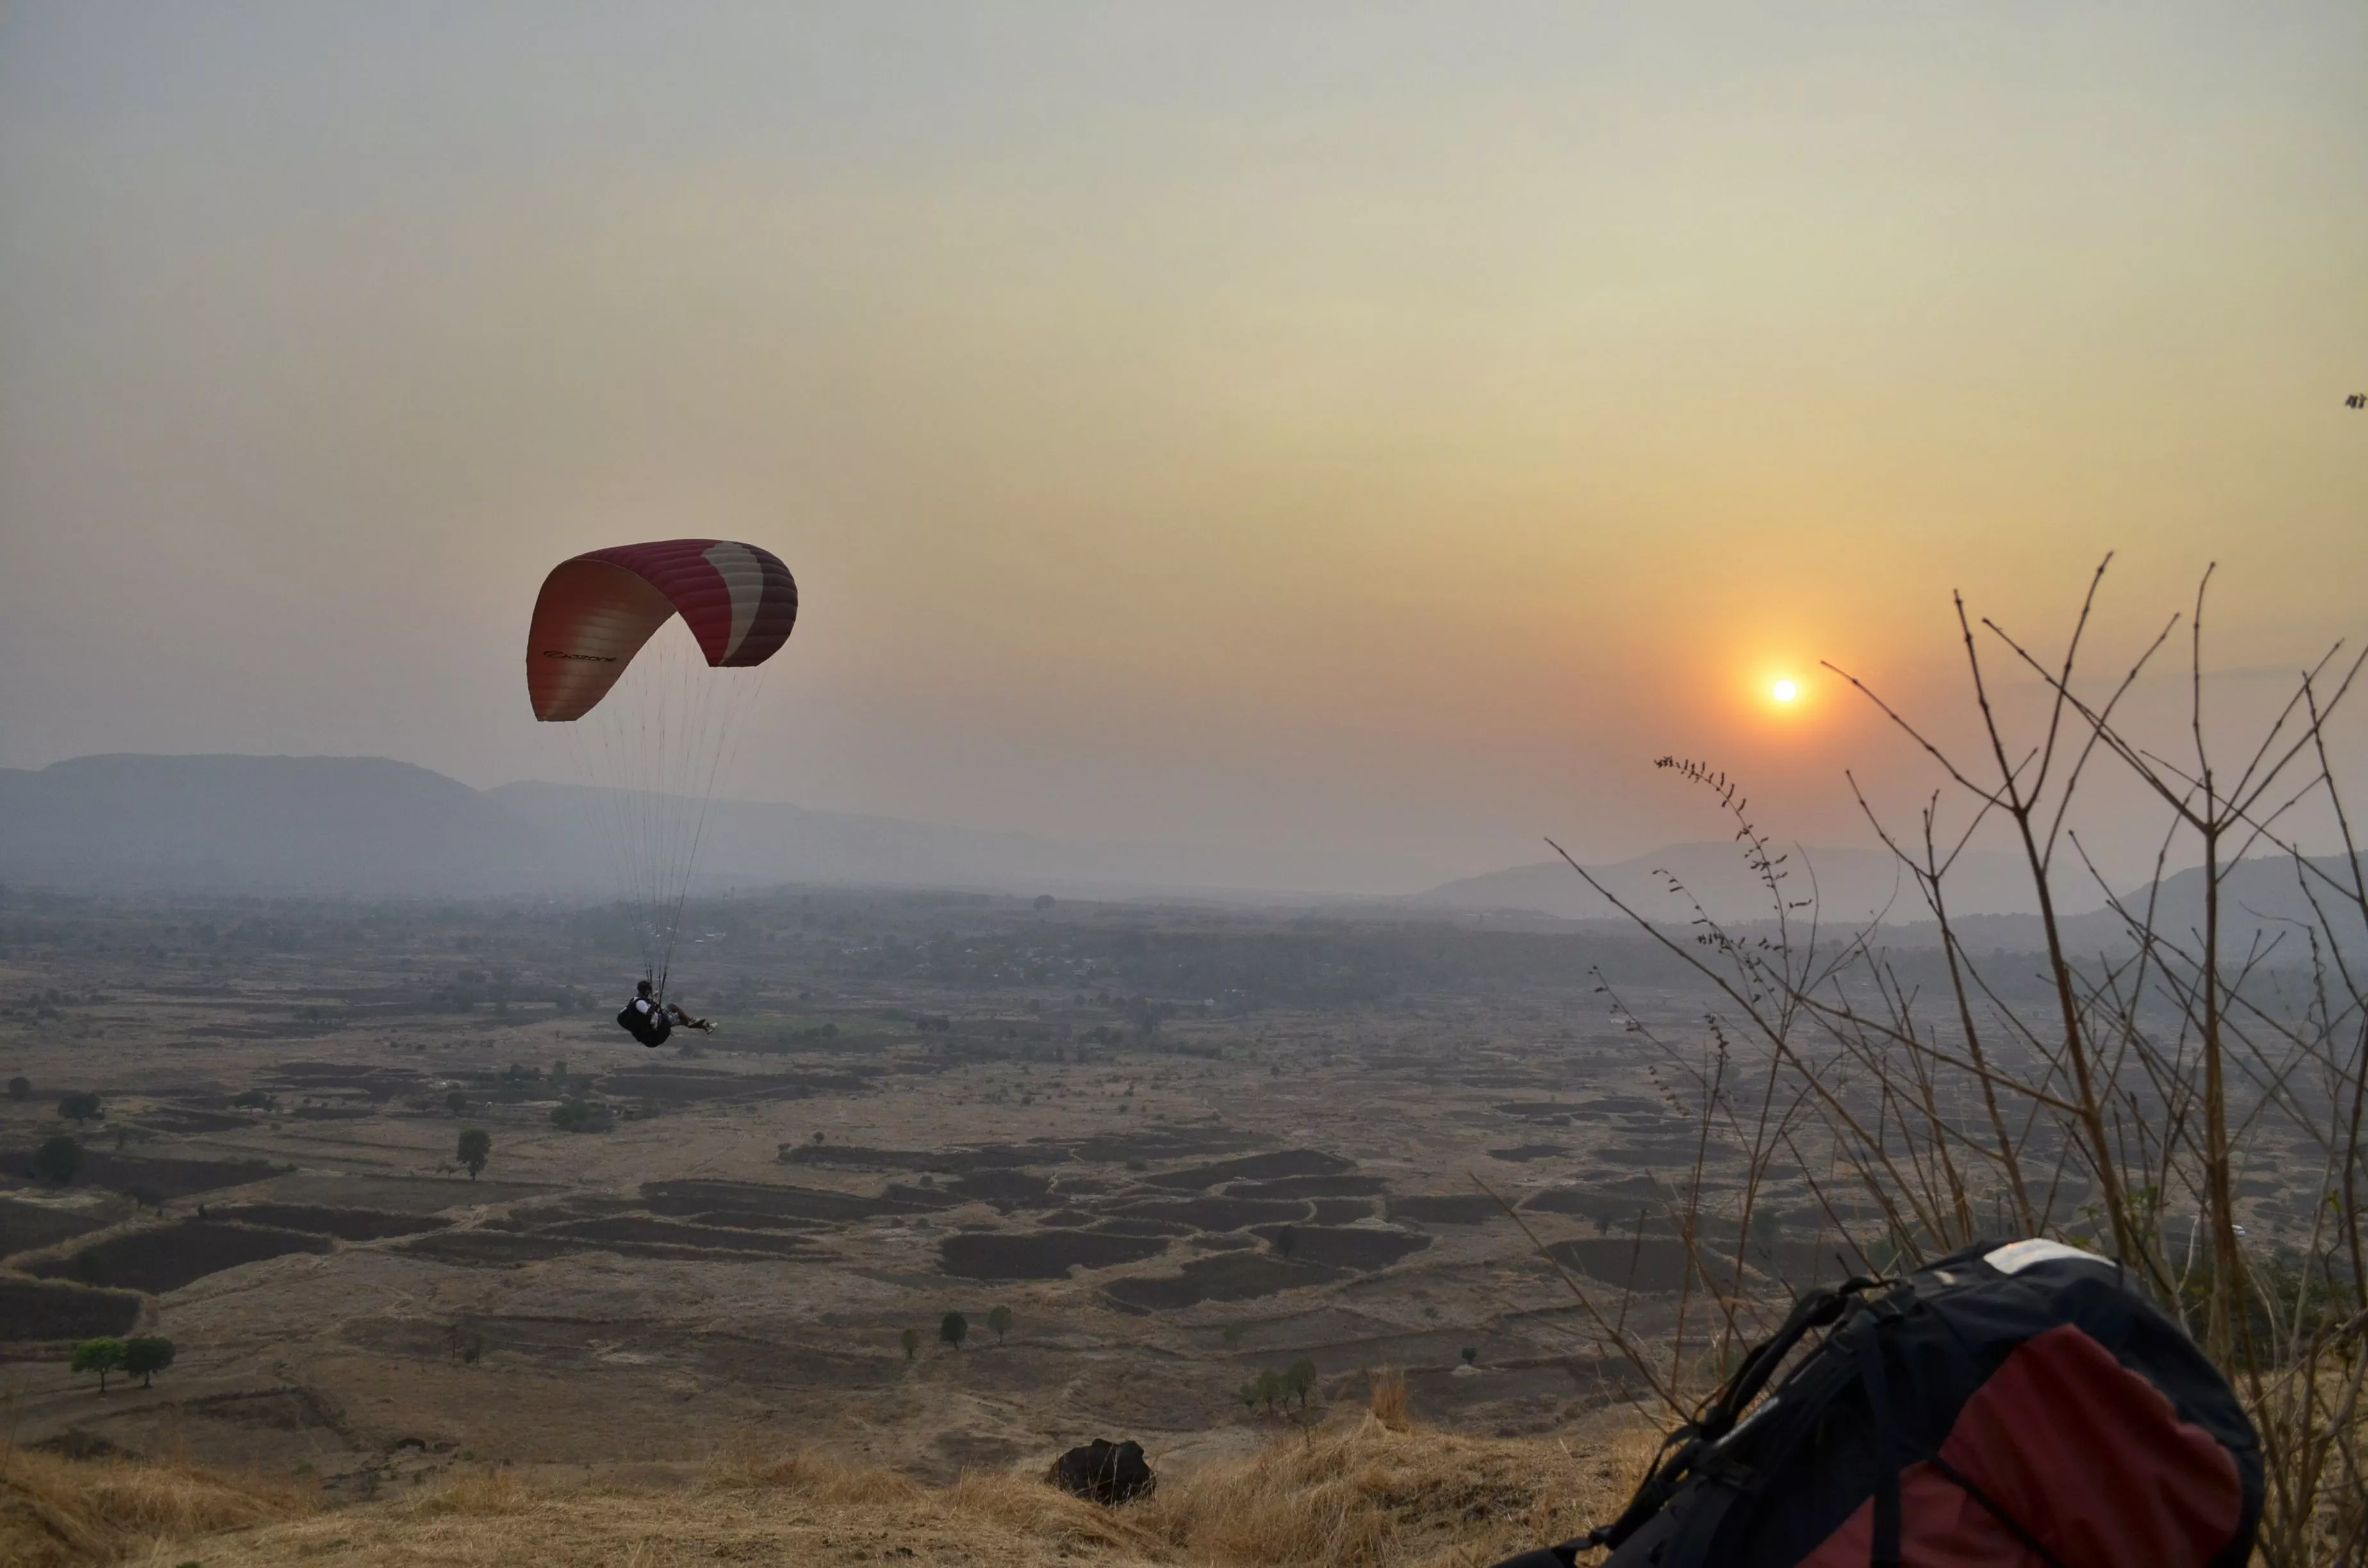 Aeroxtreme Escuela de Parapente in Peru, South America | Paragliding - Rated 5.2